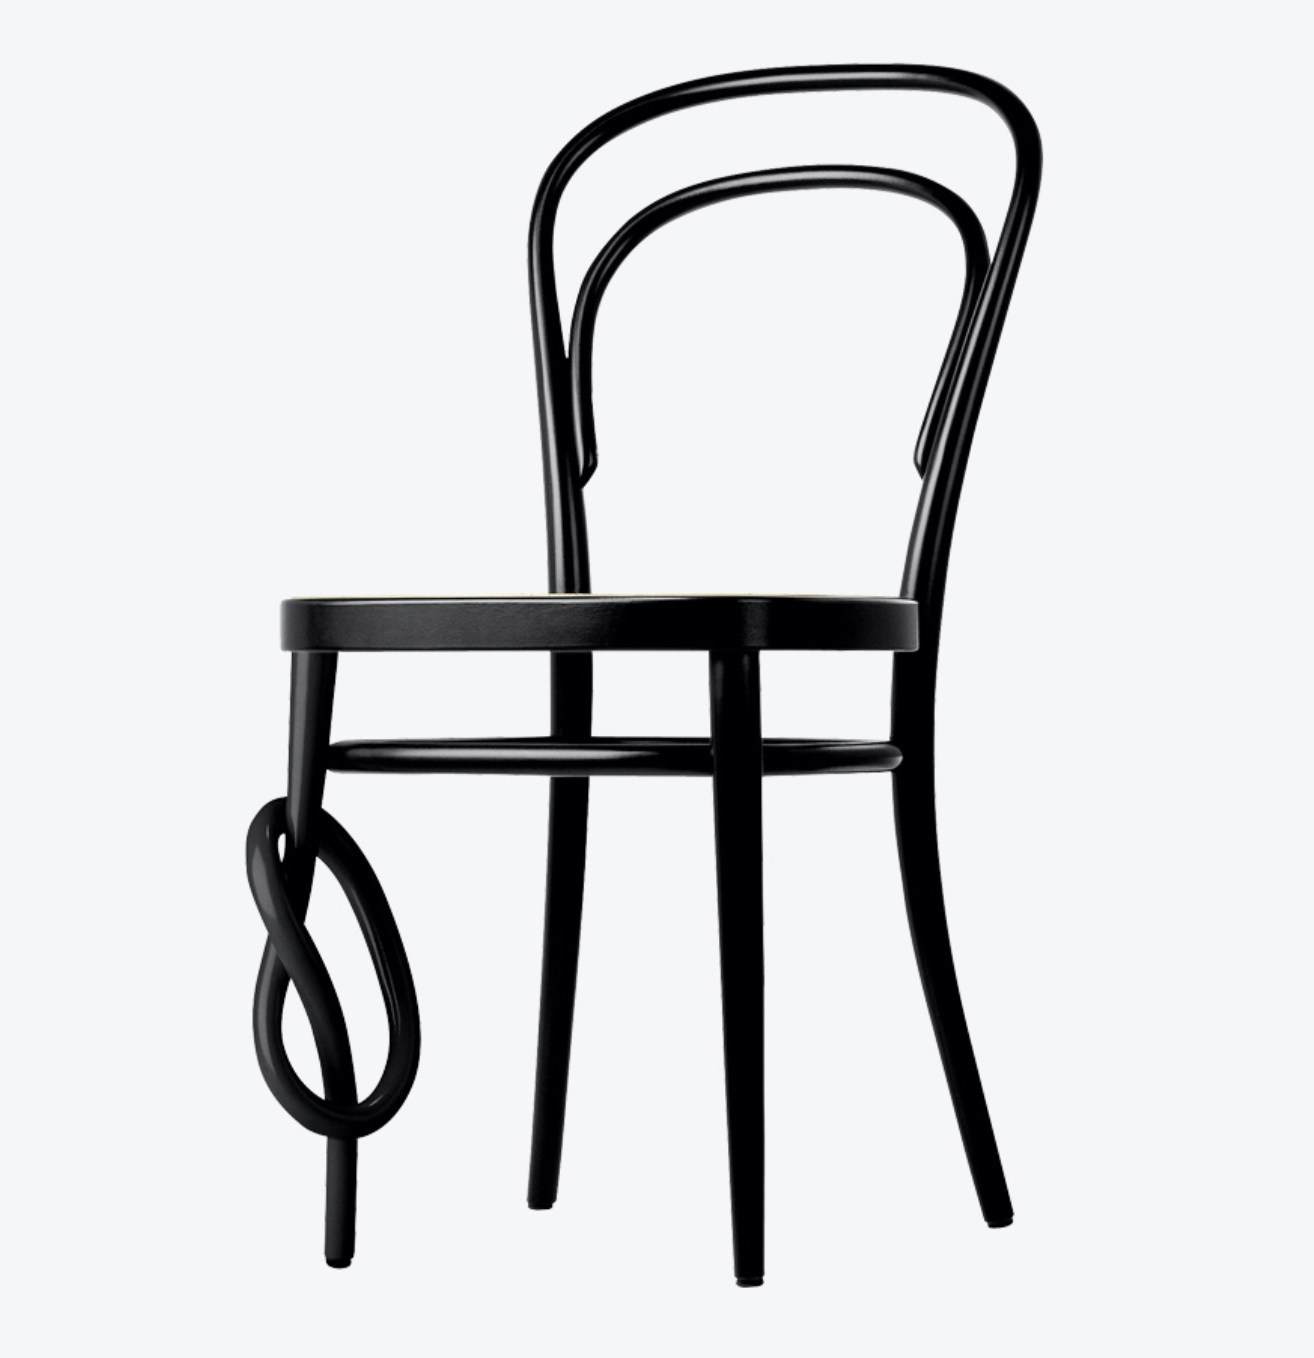 Bentwood chair Thonet 214 K